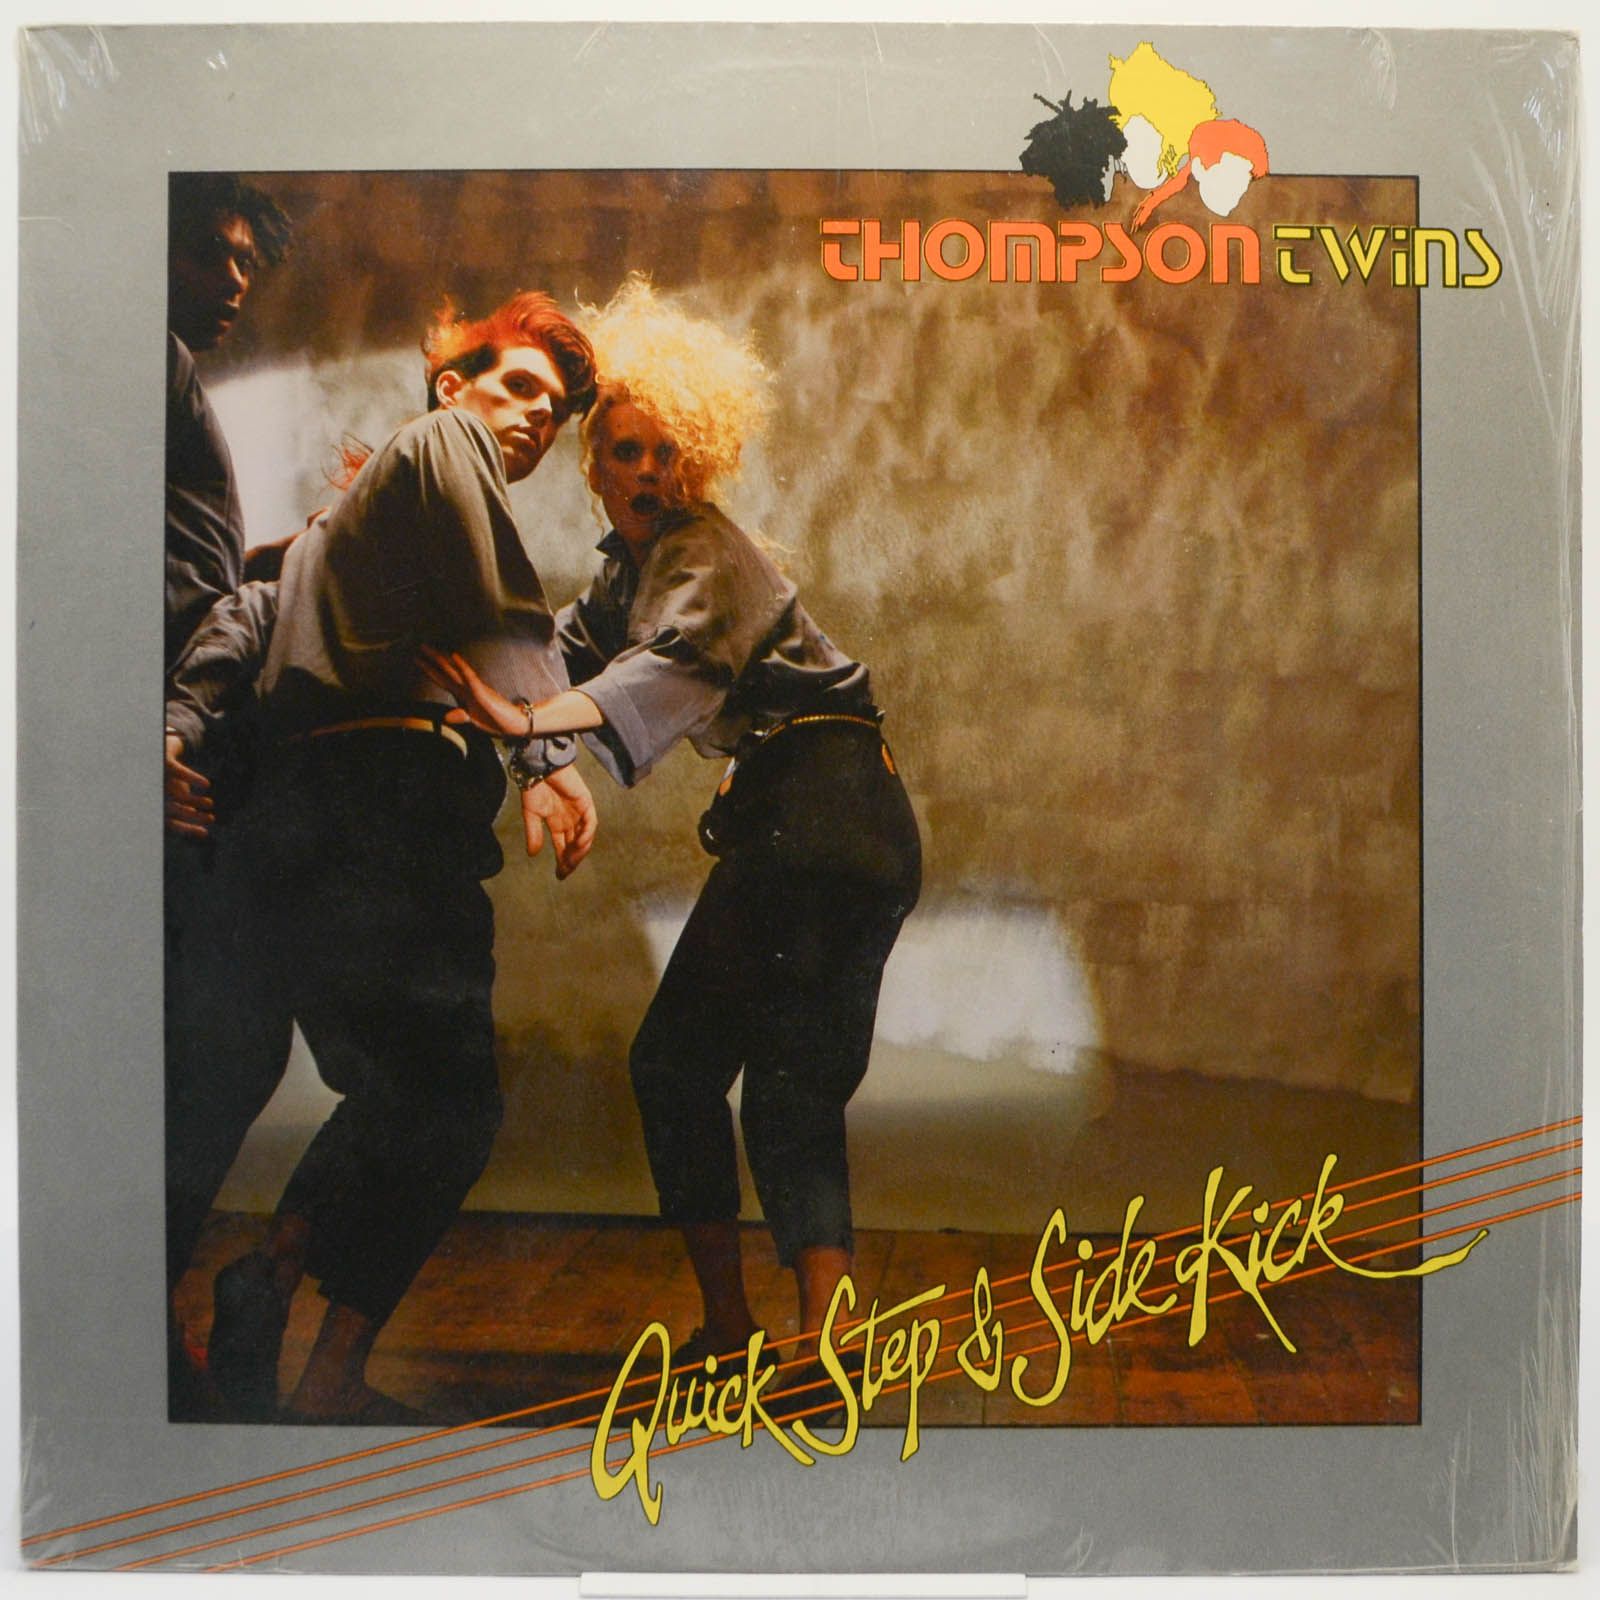 Thompson Twins — Quick Step & Side Kick, 1983